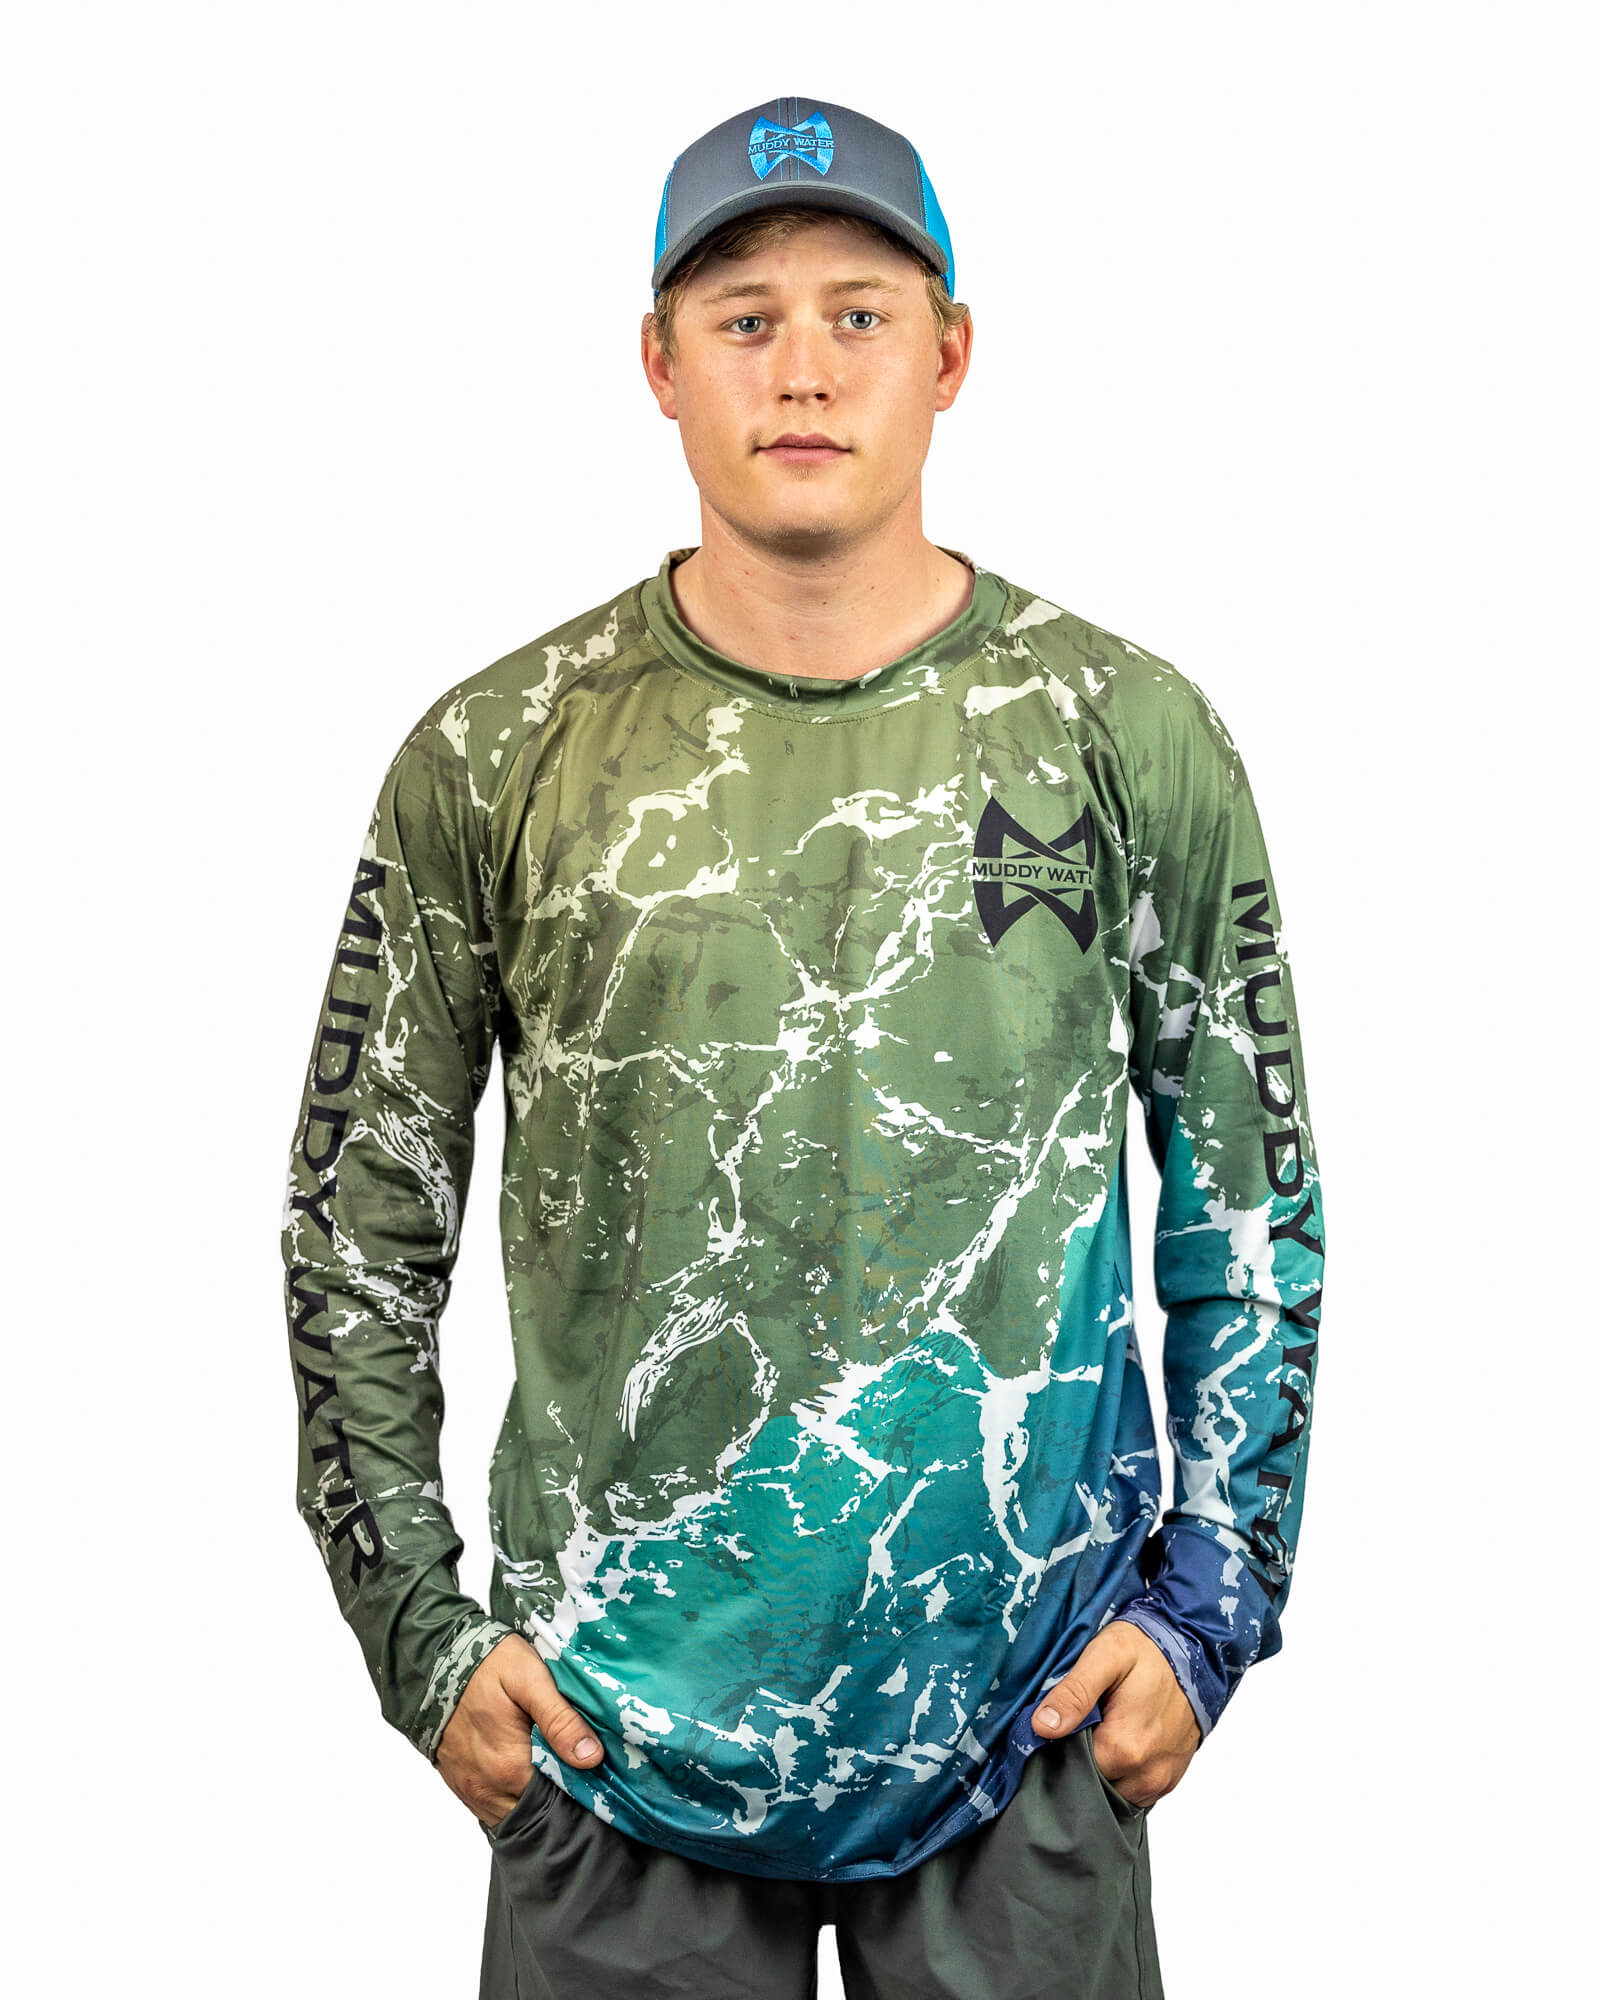 MERGE Limited Edition Fishing Shirt